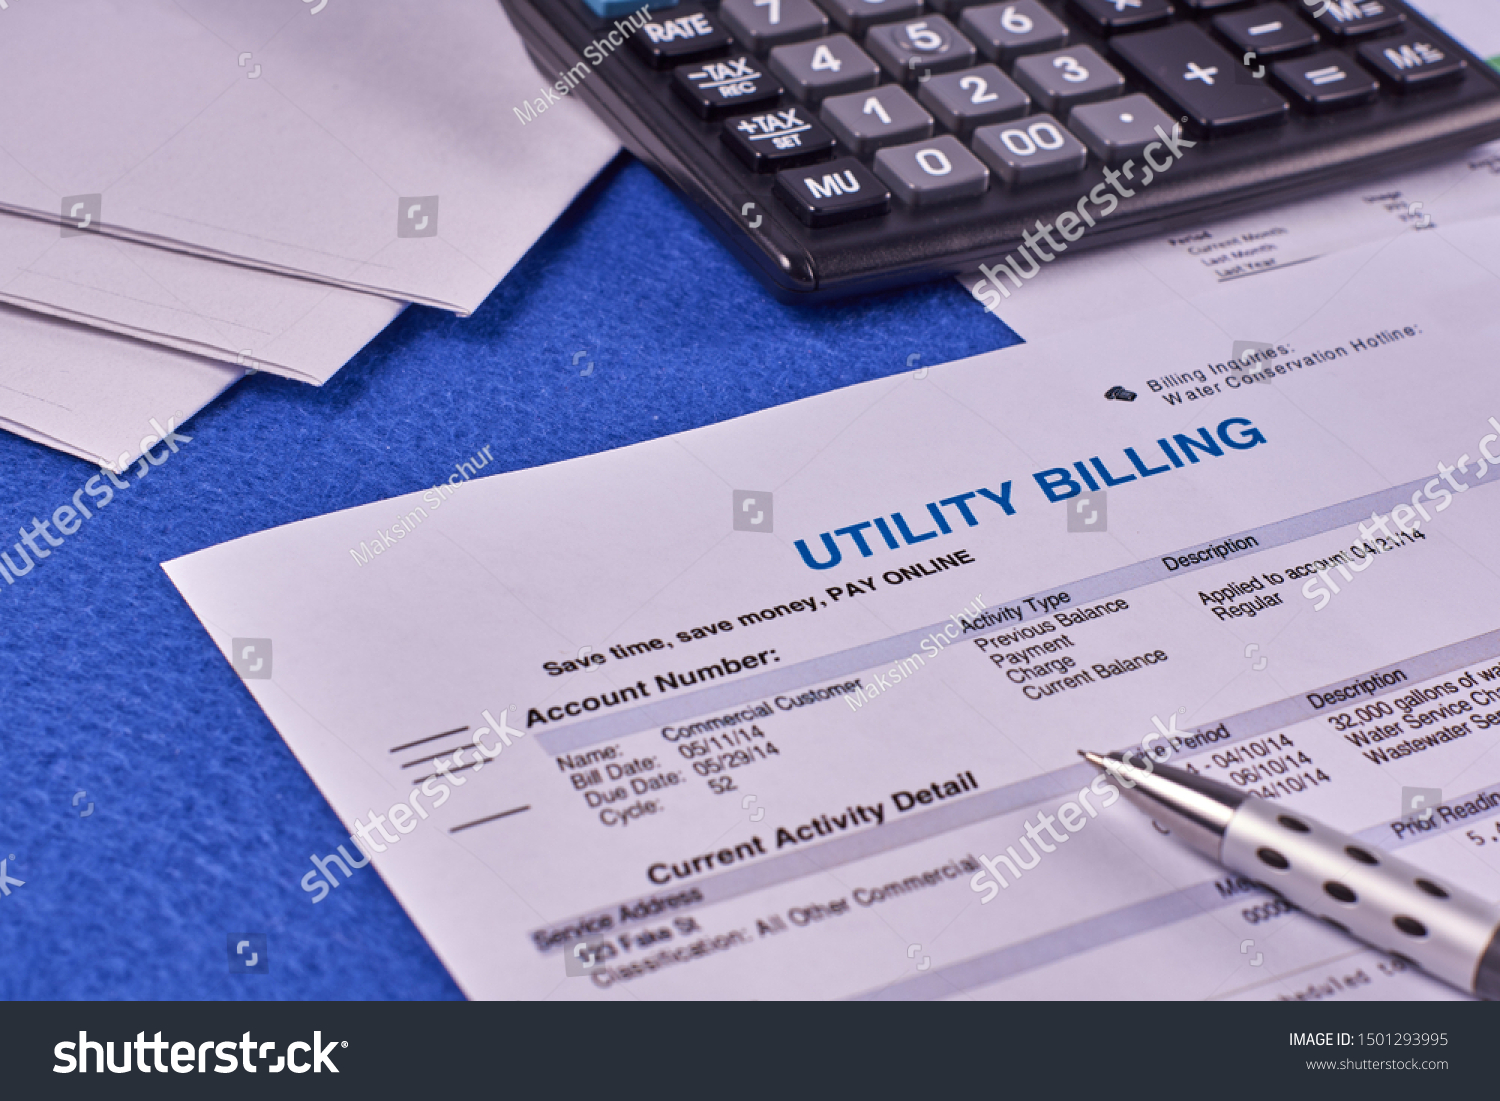 Communal payments. Utility billing sheet, calculator, pen and envelopes on a blue velvet background #1501293995